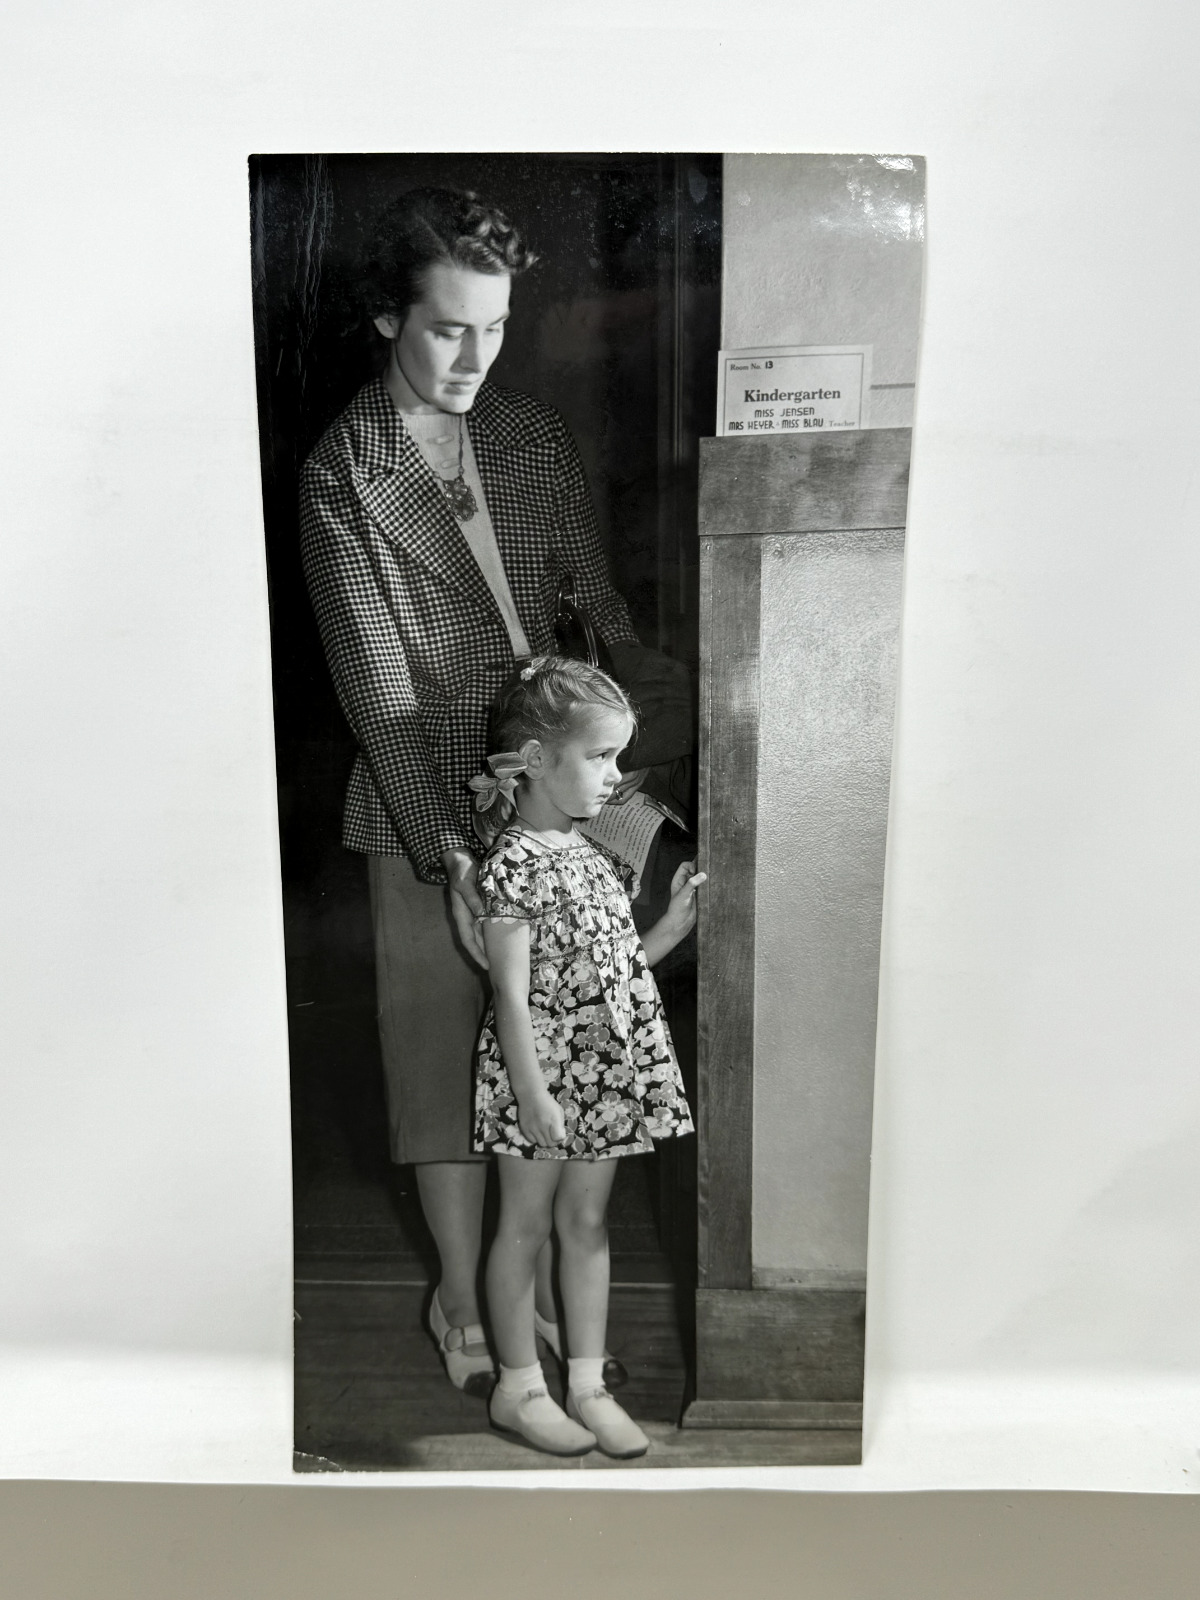 Original Oversized Press Photo: Kindergarten Teacher/Child Gift 30\'s 40\'s 13.5x6